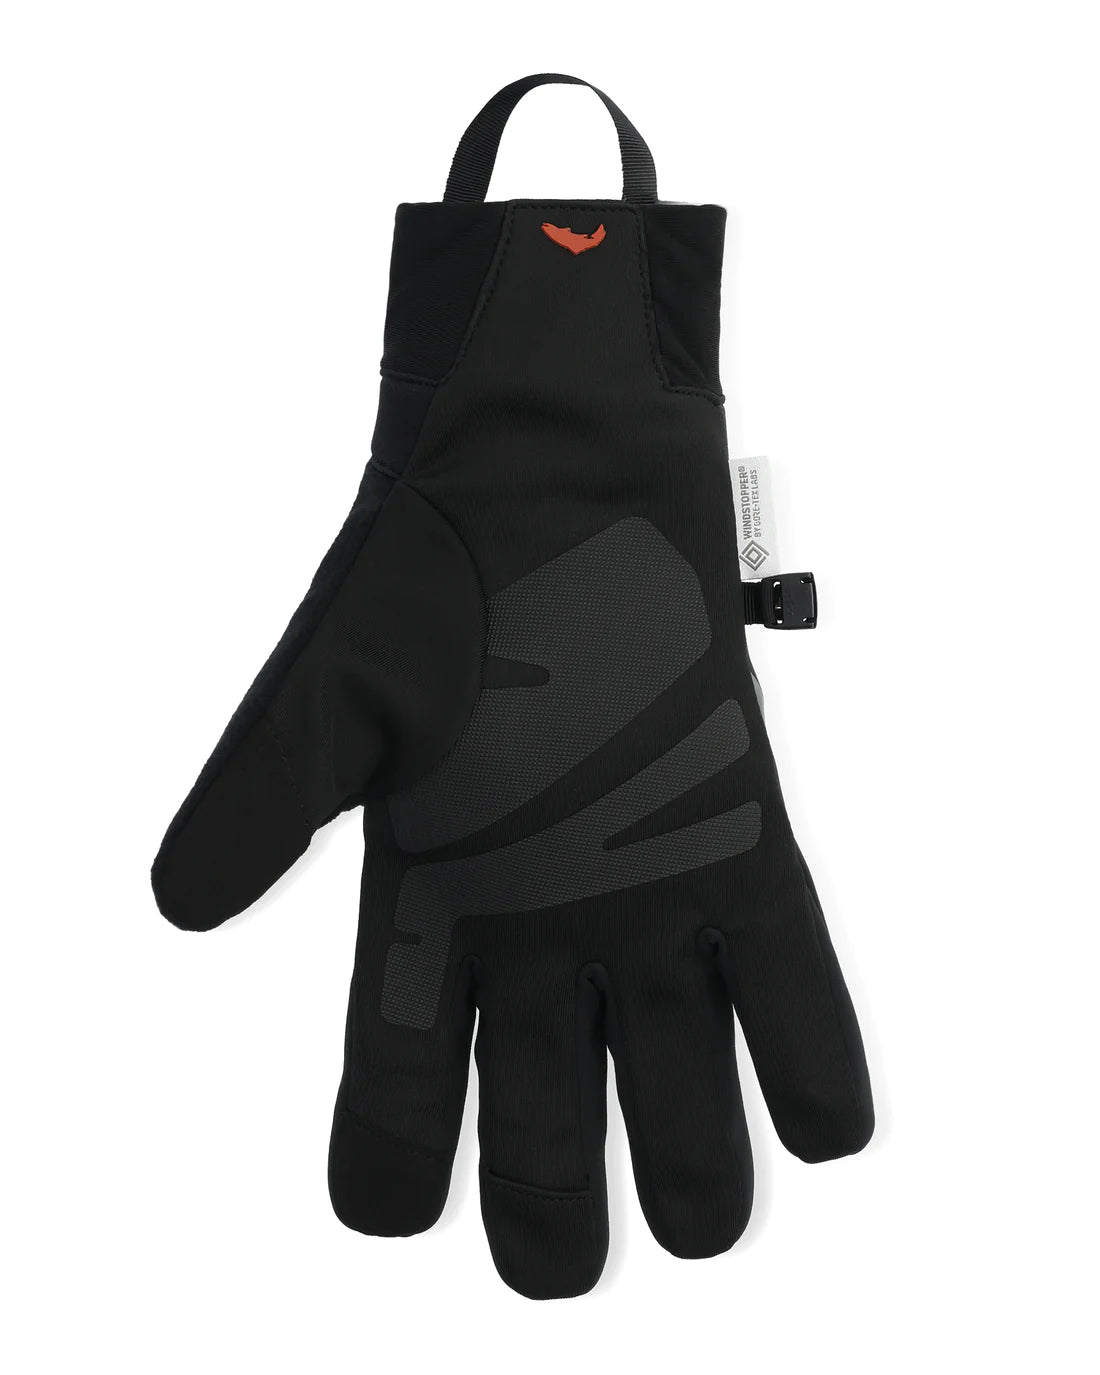 Simms Windstopper® Flex Glove